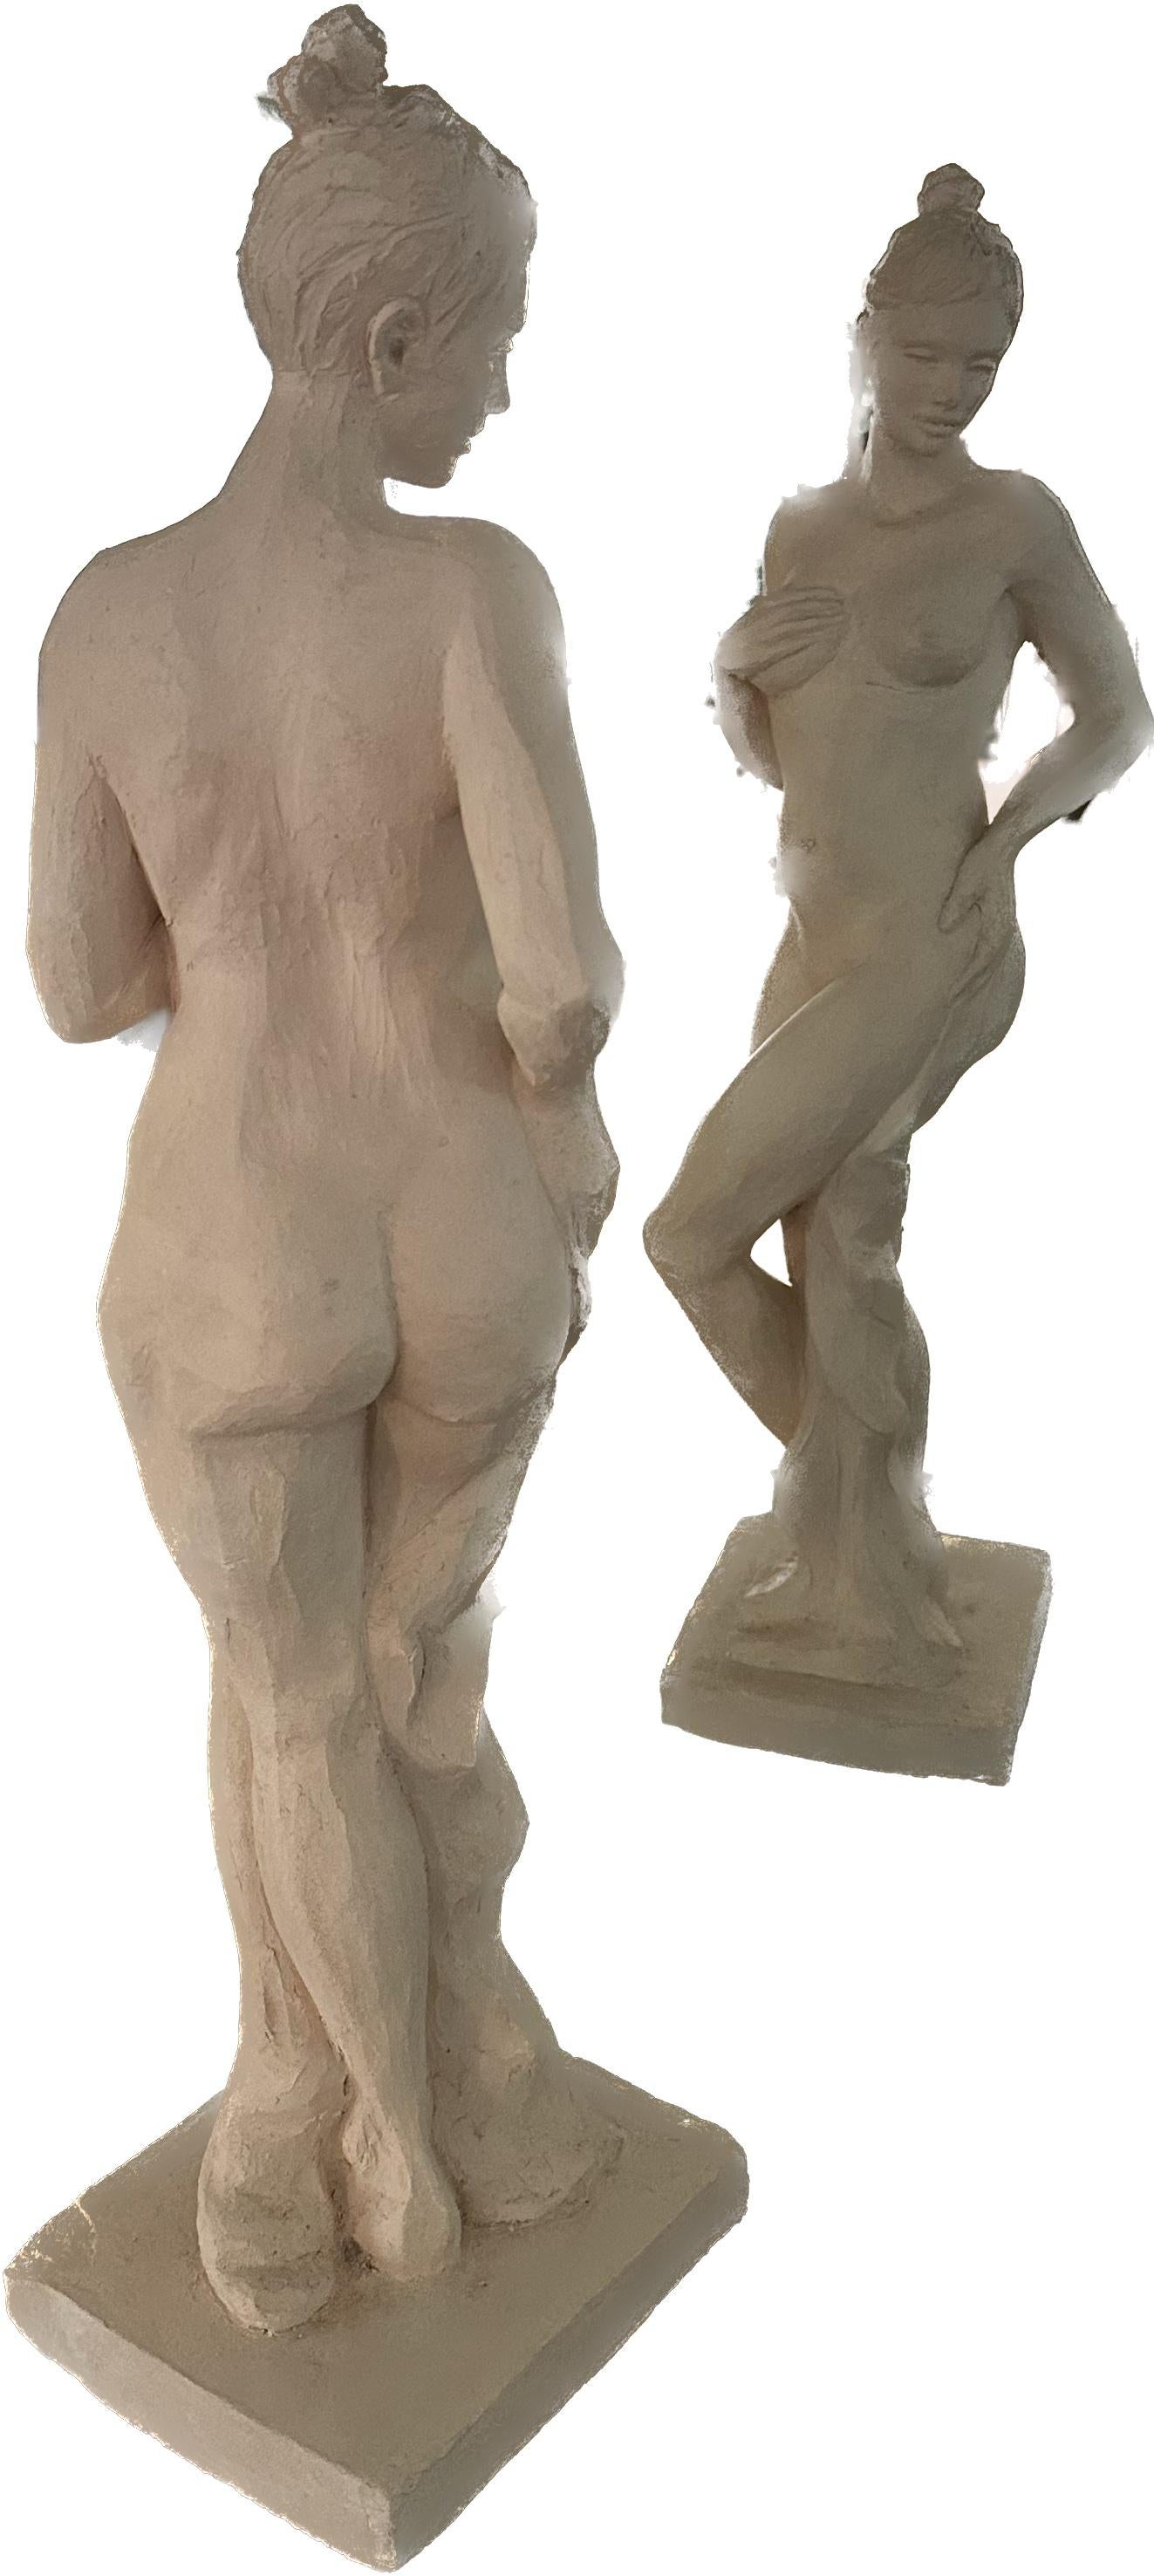 Artist:  (Garo) Karapet Balakeseryan  
Medium: Ceramic, Clay, Handmade, One of a Kind 
Year: 2023
Style: Classic, Impressionism, 
Subject: Nude Figure,
Size: 24